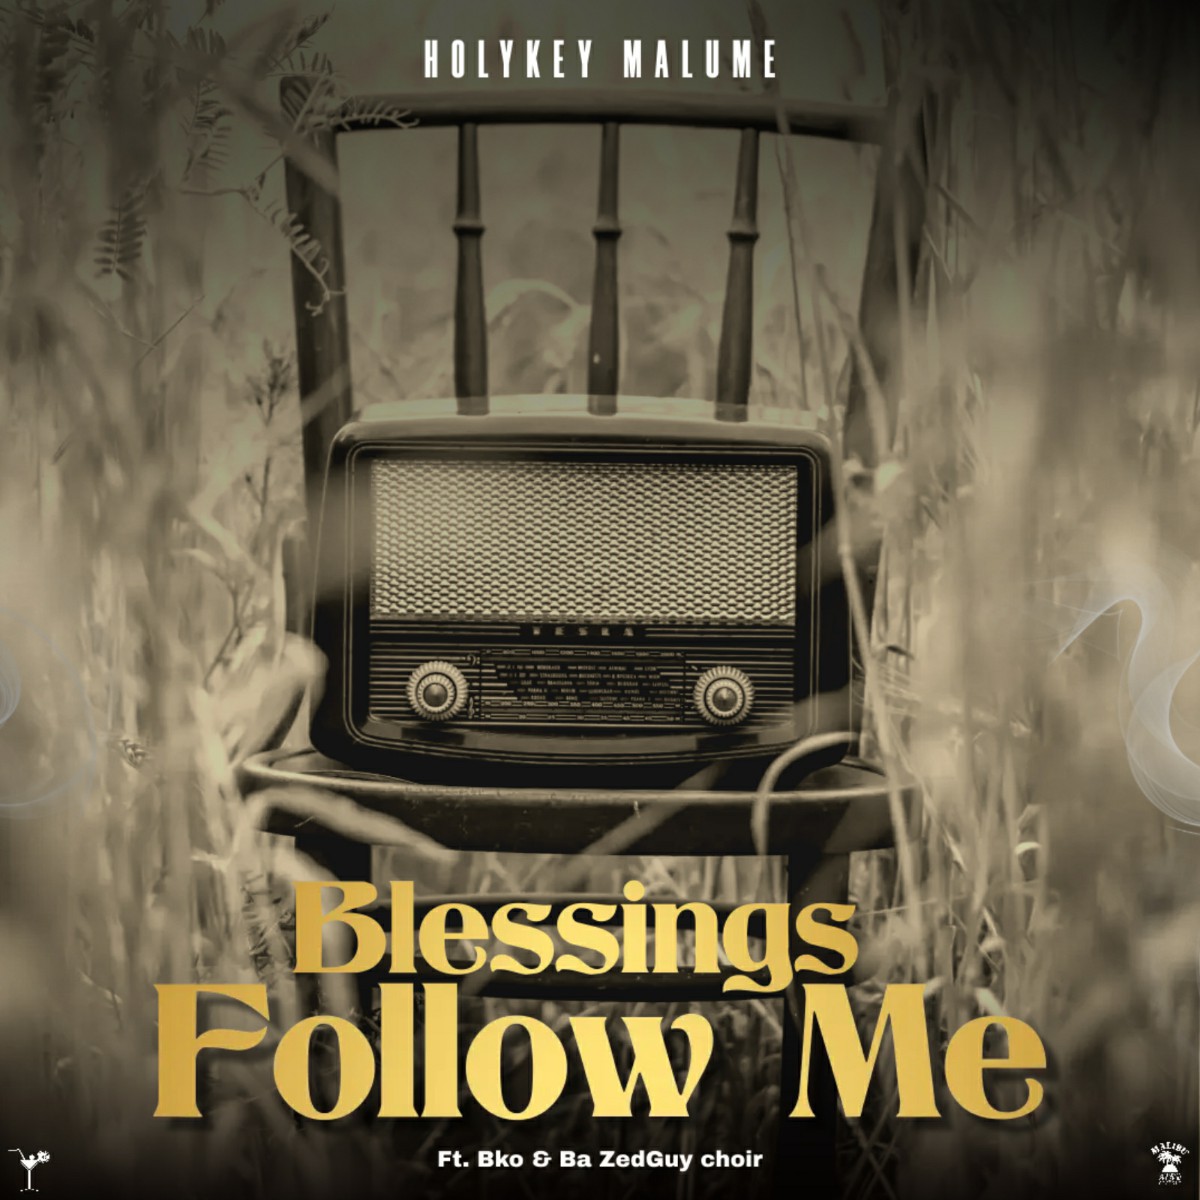 Holykey Malume ft. Brian Bko & Ba ZedGuy Choir - Blessings Follow Me